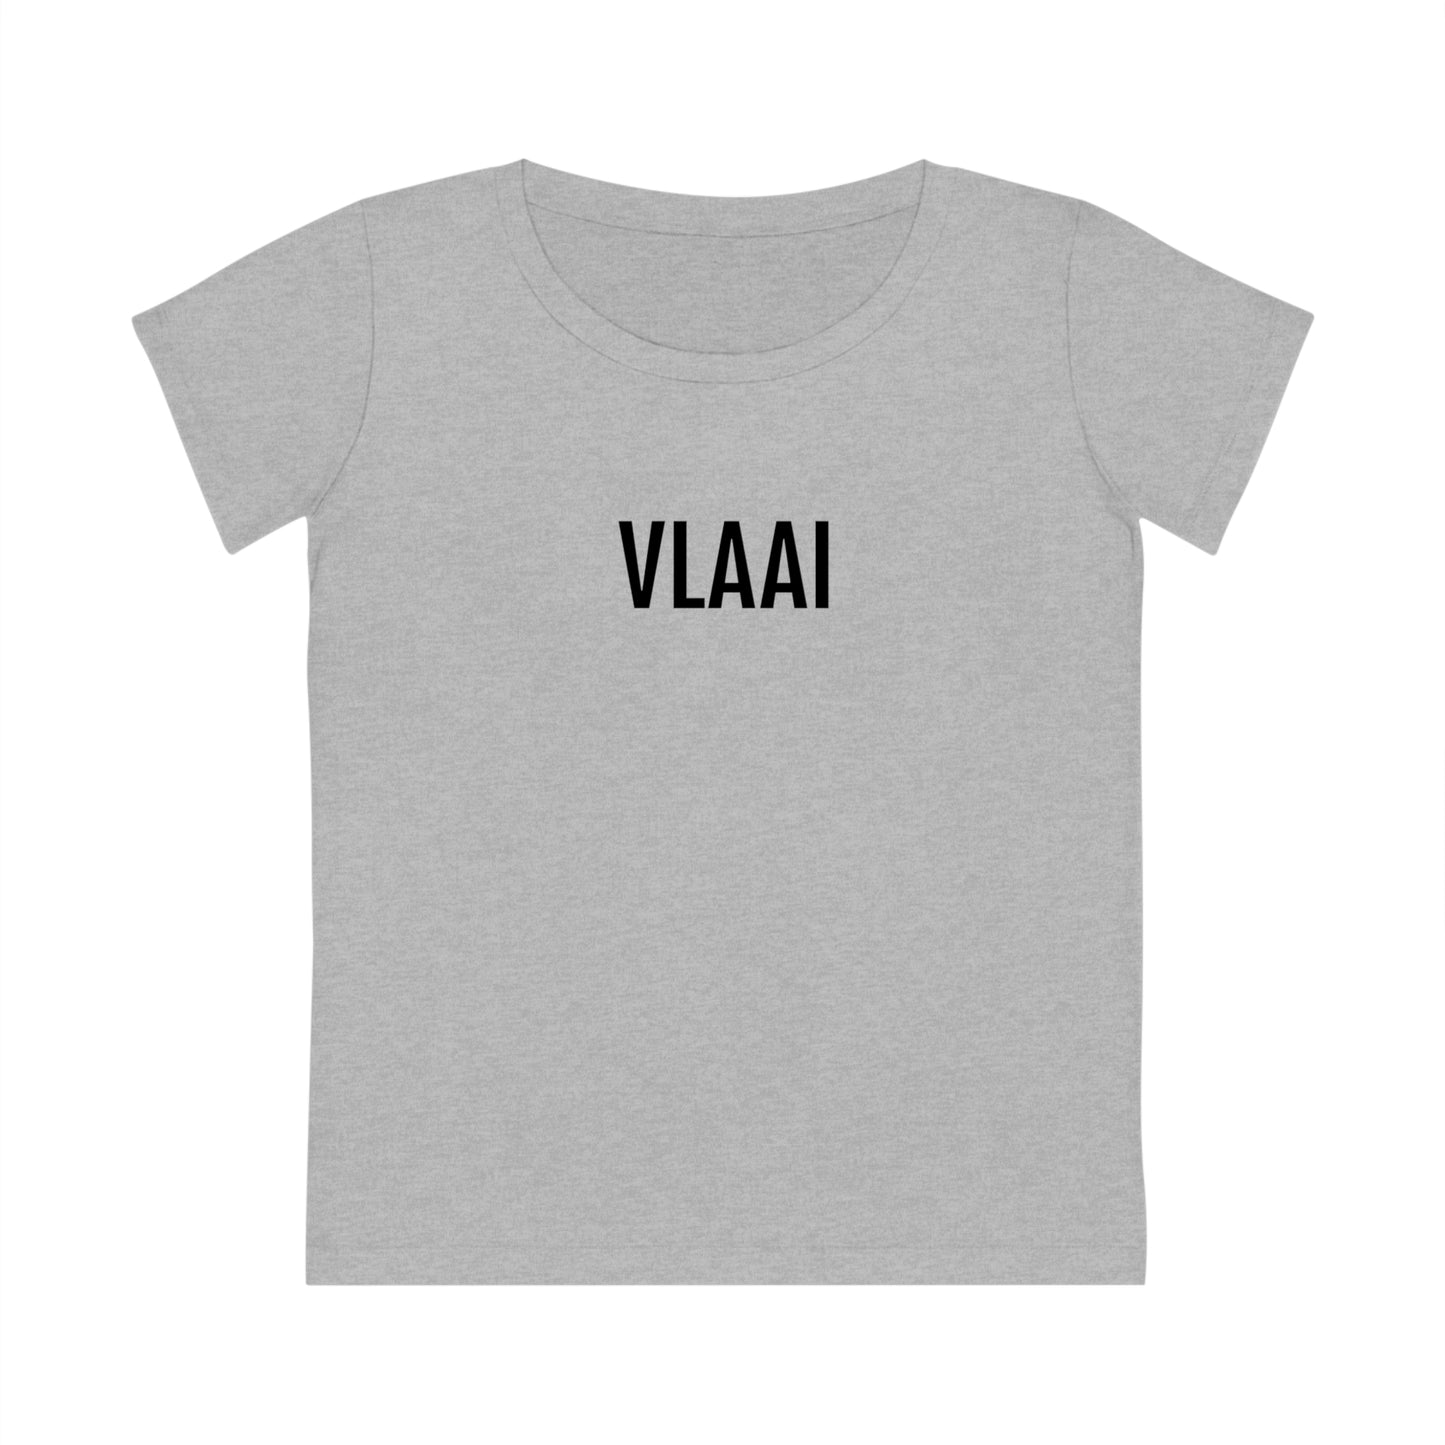 VLAAI | Dames T-Shirt uit Limburg